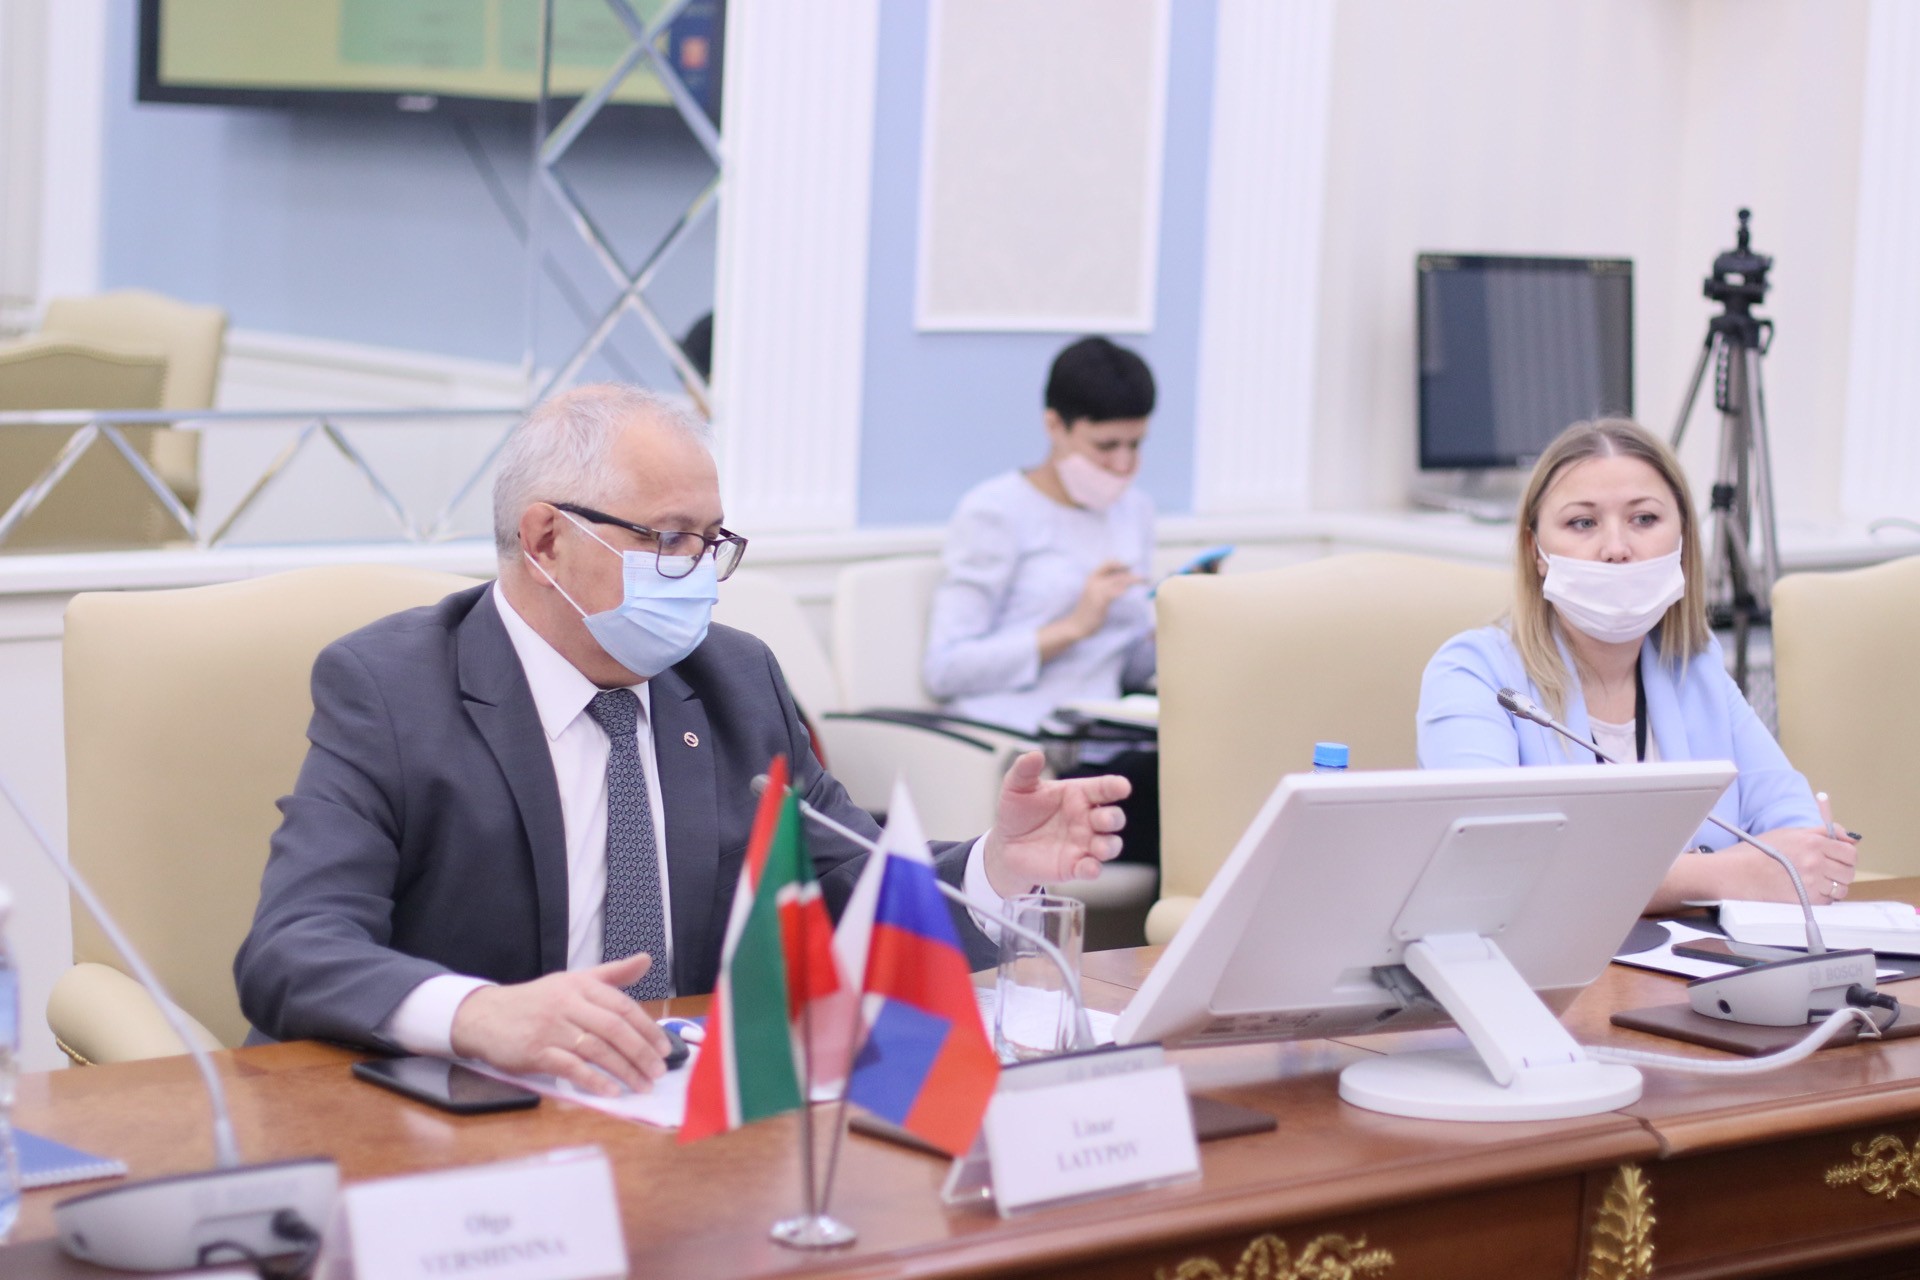 Ambassador of the Republic of Yemen Ahmed Salem al-Waheishi visited Kazan University ,Republic of Yemen, Embassy of Yemen in Russia